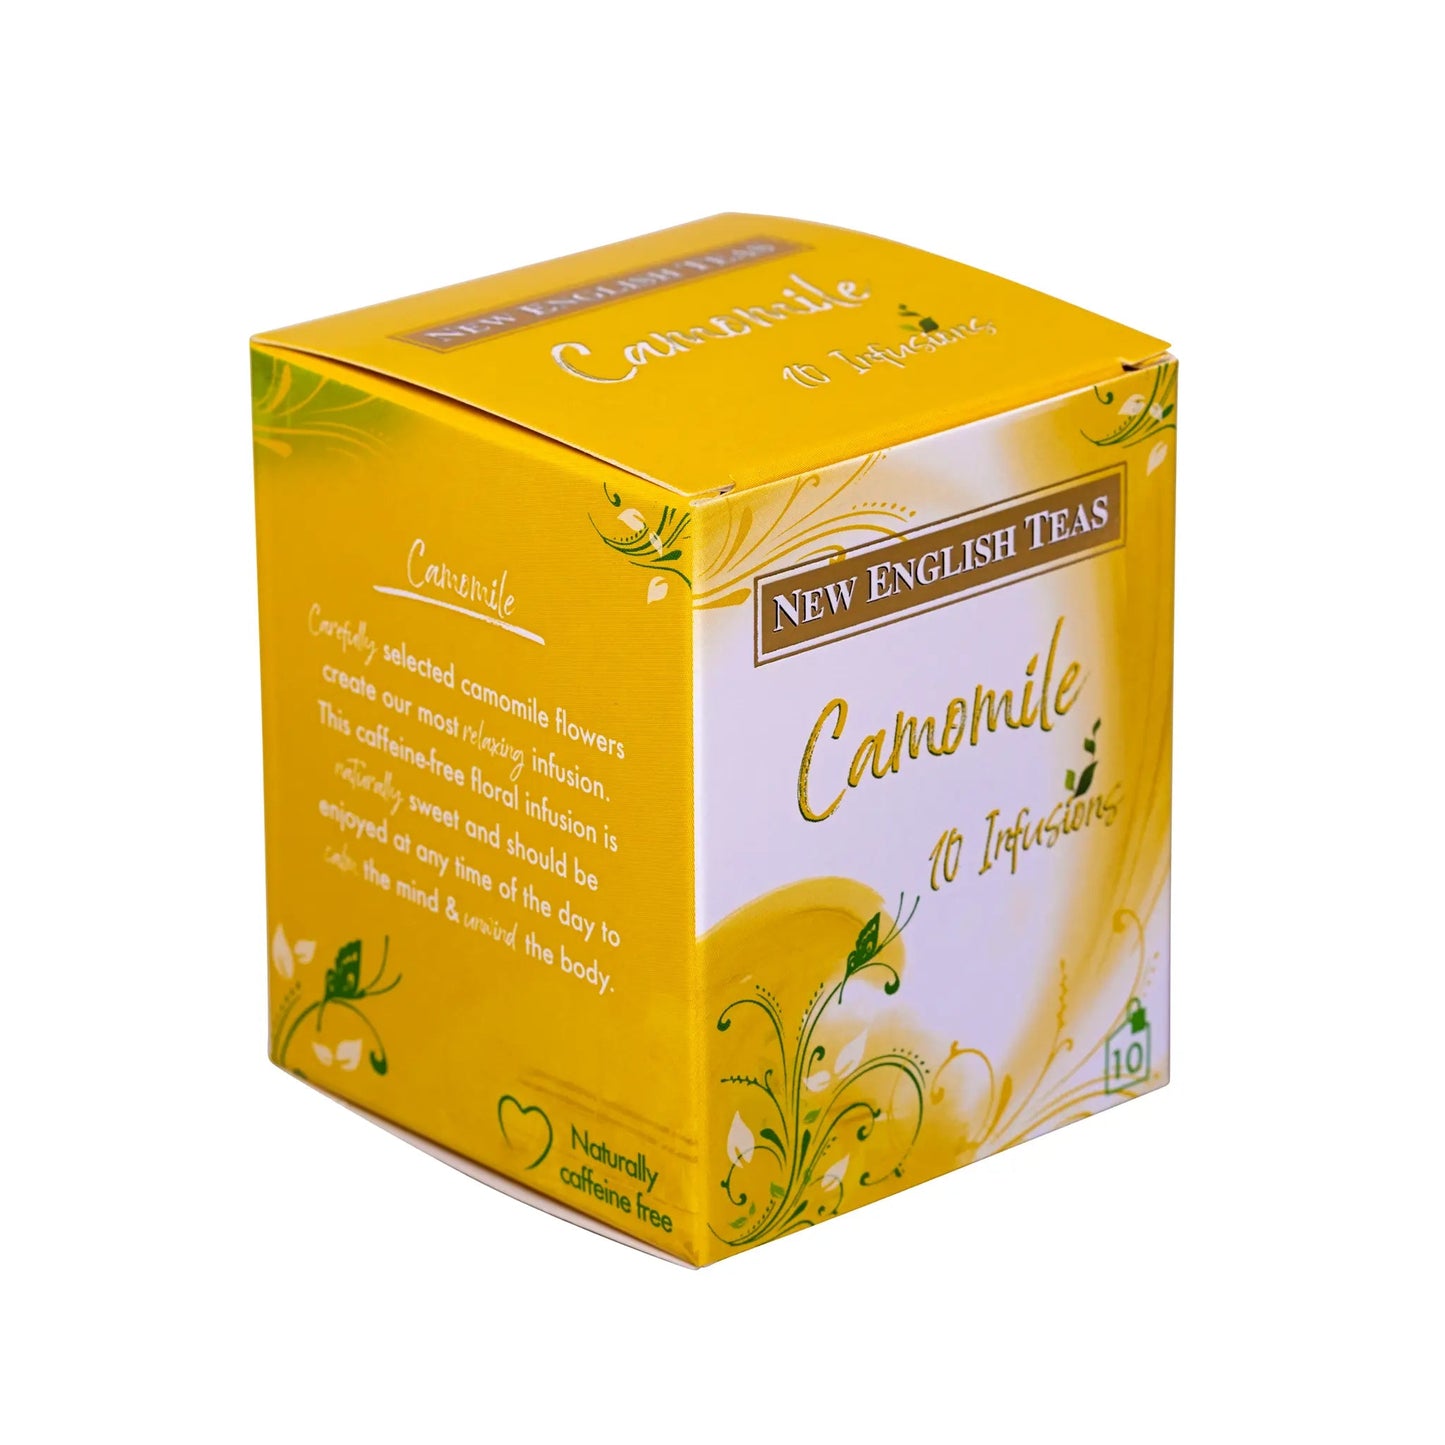 Pure Camomile Tea 10 Individually Wrapped Teabags Tea Boxes New English Teas 